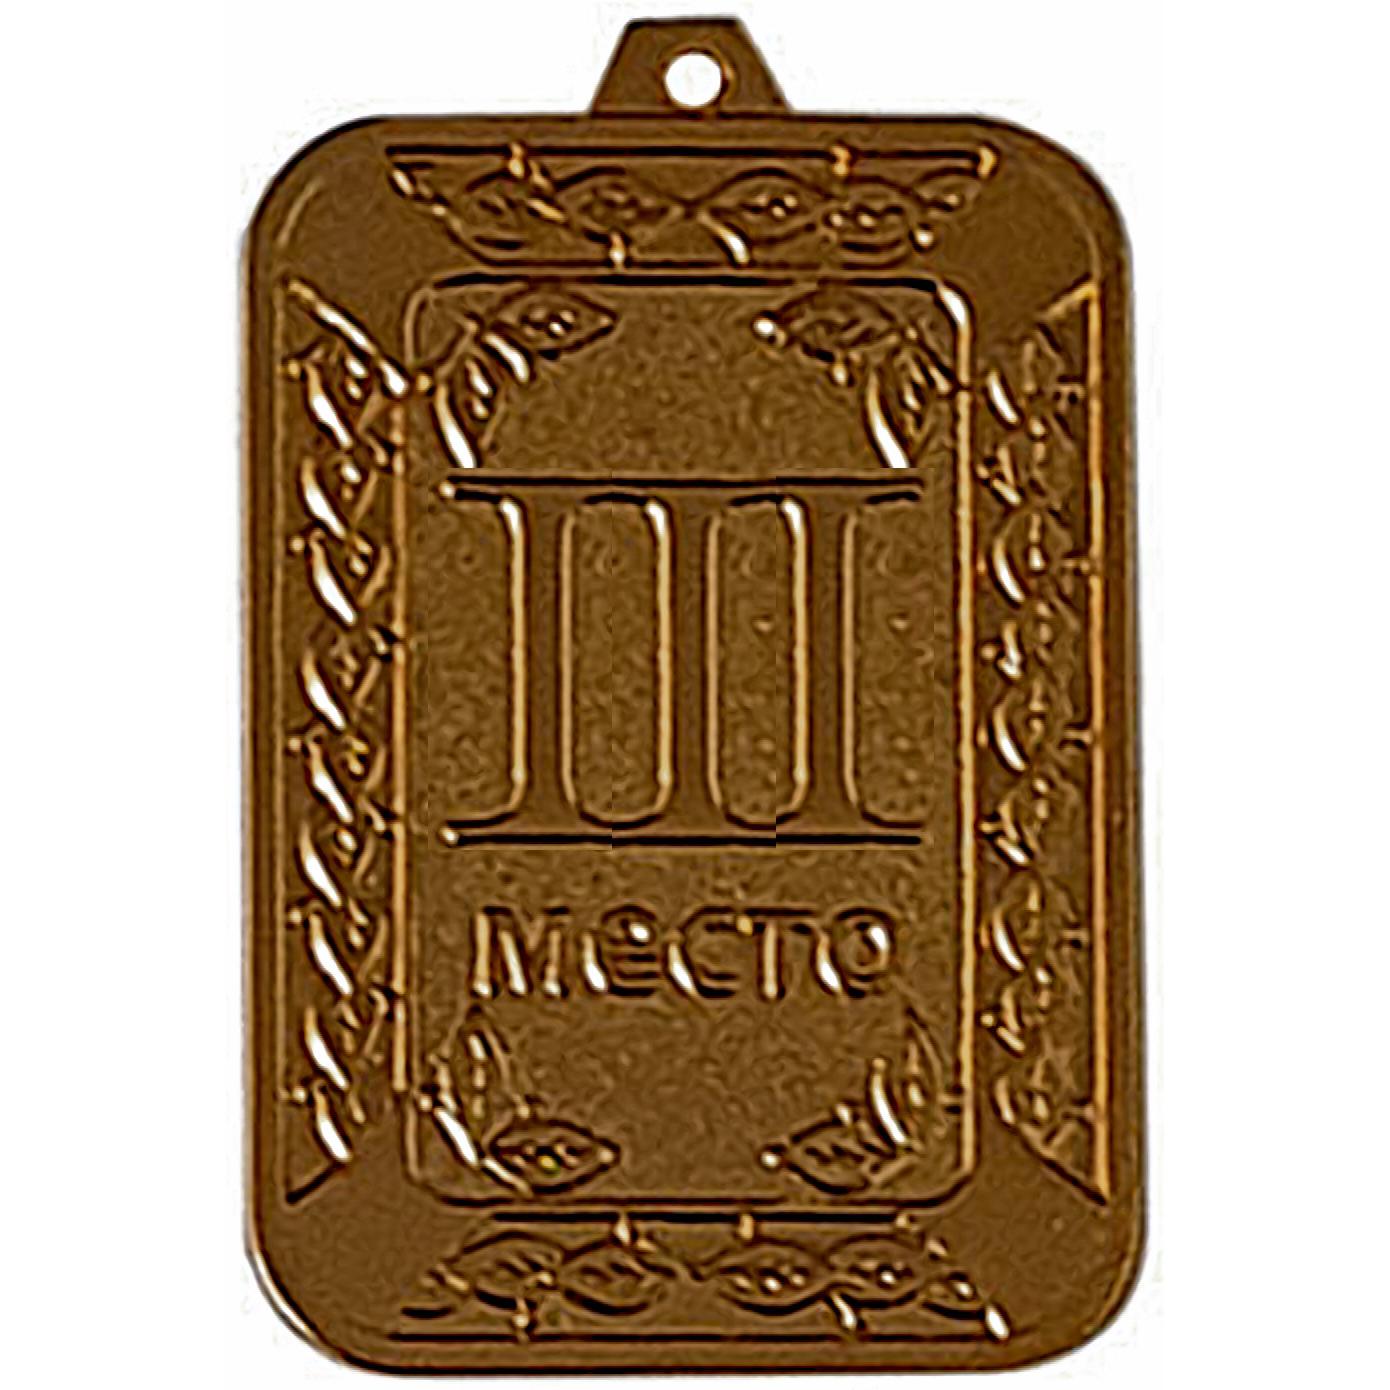 Медаль №2441 (3 место, размер 40x70 мм, металл, цвет бронза)